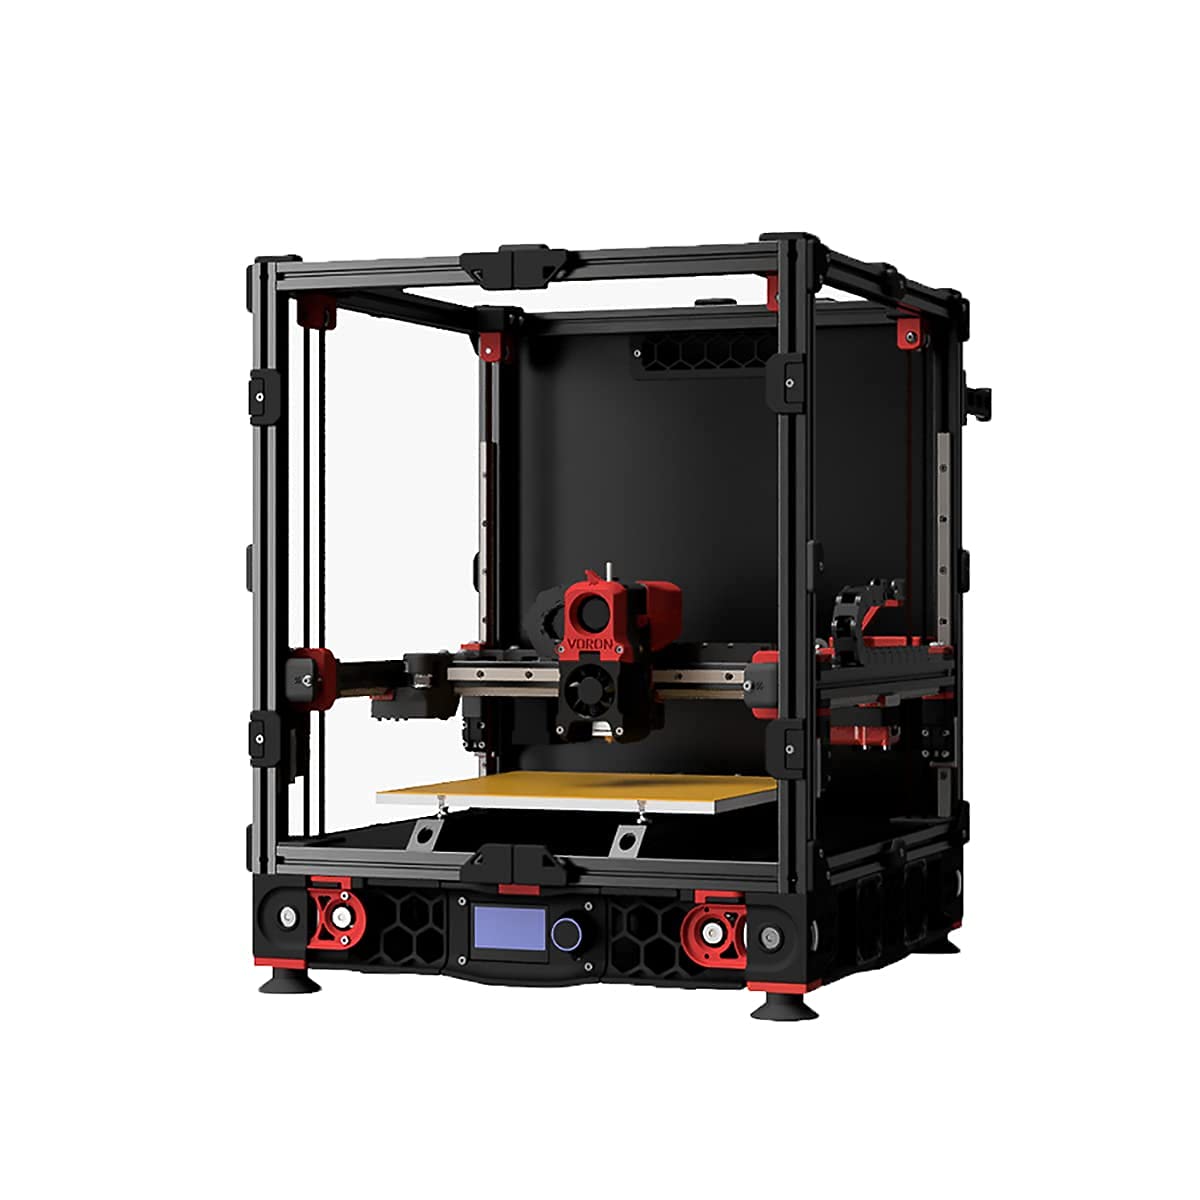 Full Fastener Set for Voron 2.4 3D Printer - Screws, Nuts, Washers, Spacers, Hexnuts